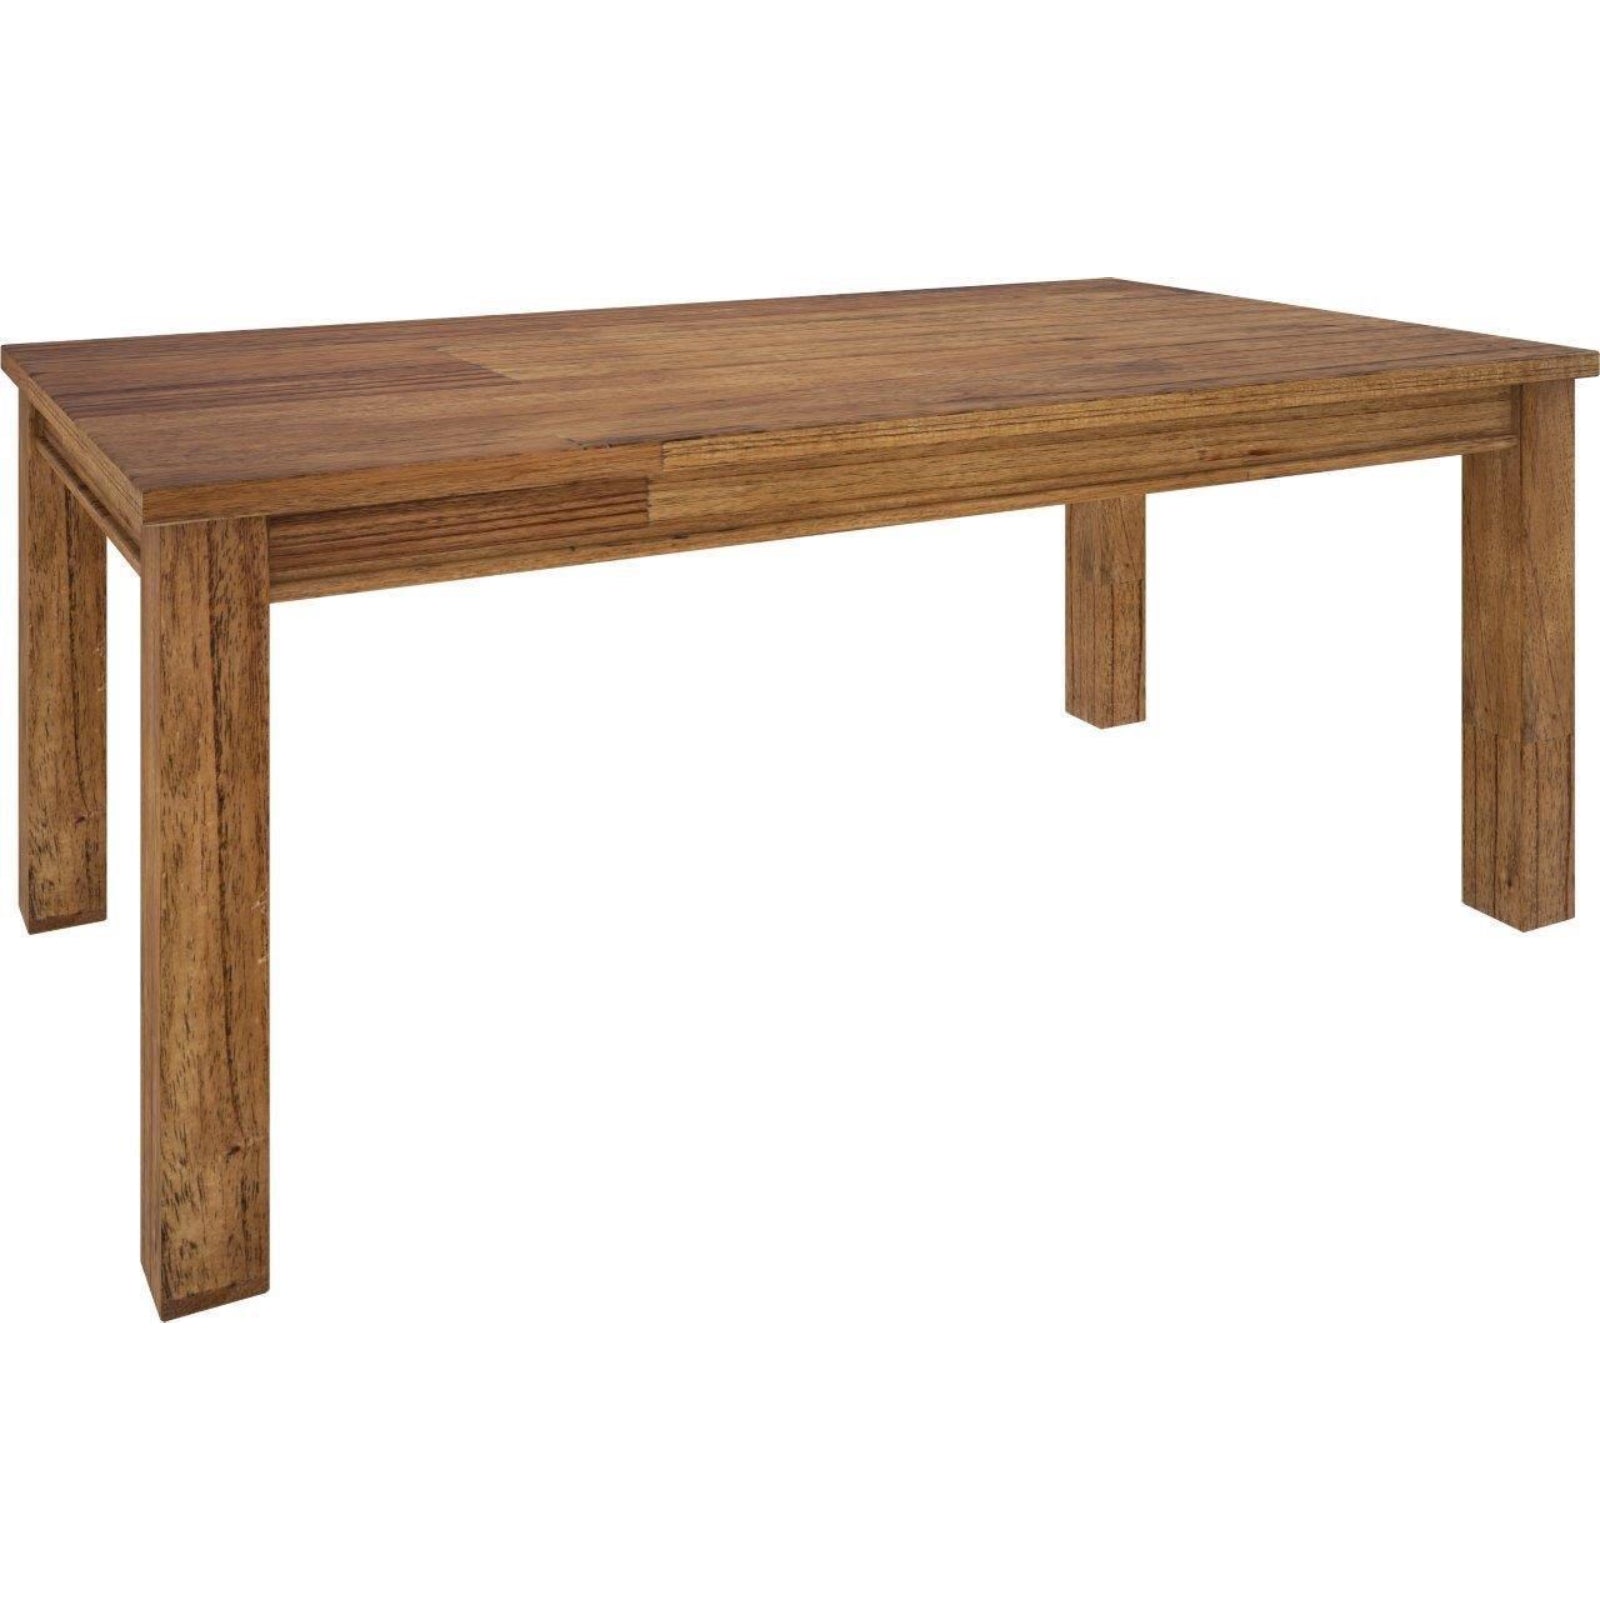 birdsville-dining-table-190cm-solid-mt-ash-wood-home-dinner-furniture-brown